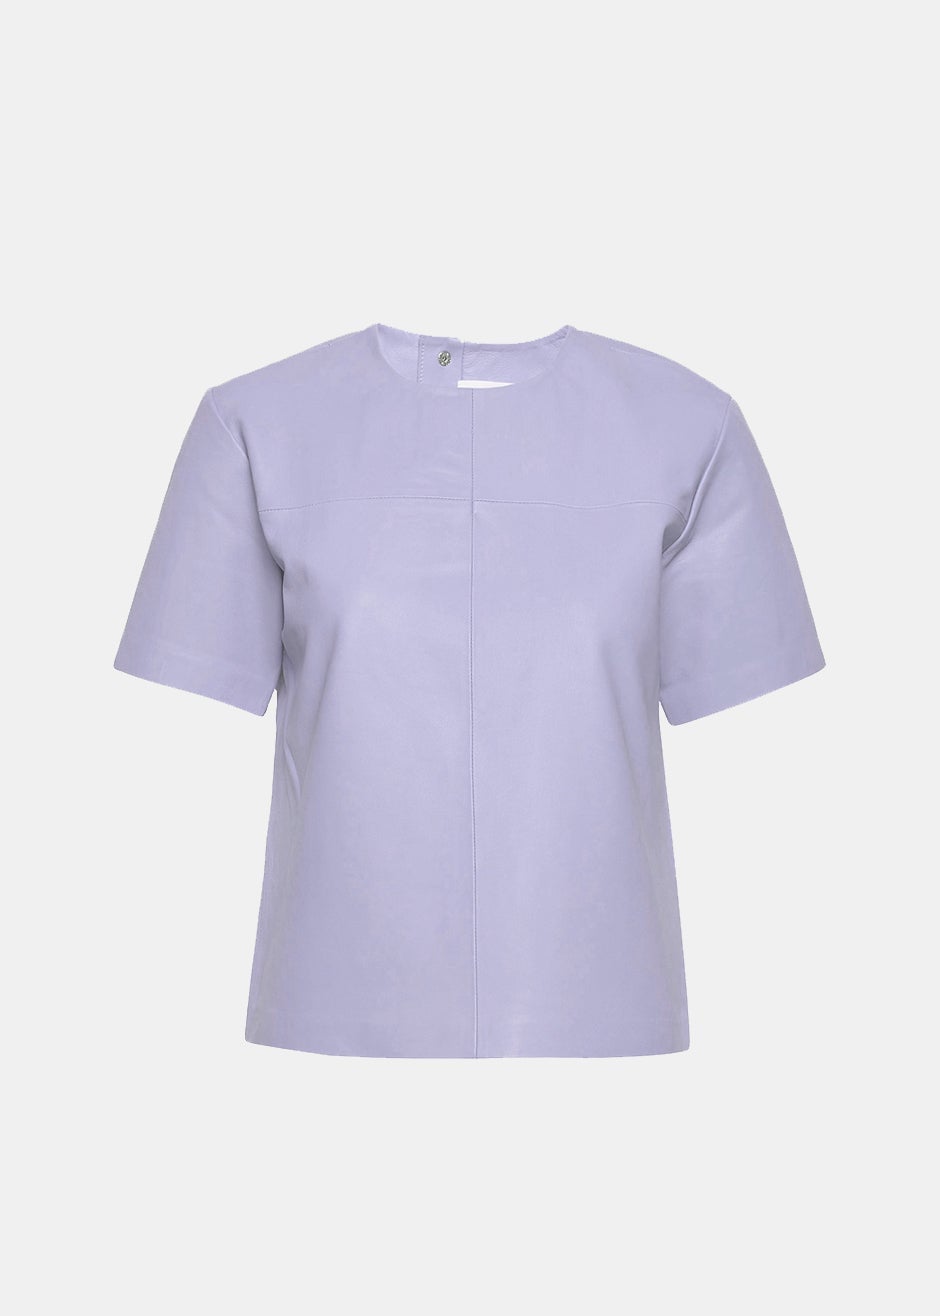 REMAIN Audrey Leather Shirt - Pastel Lilac - 6